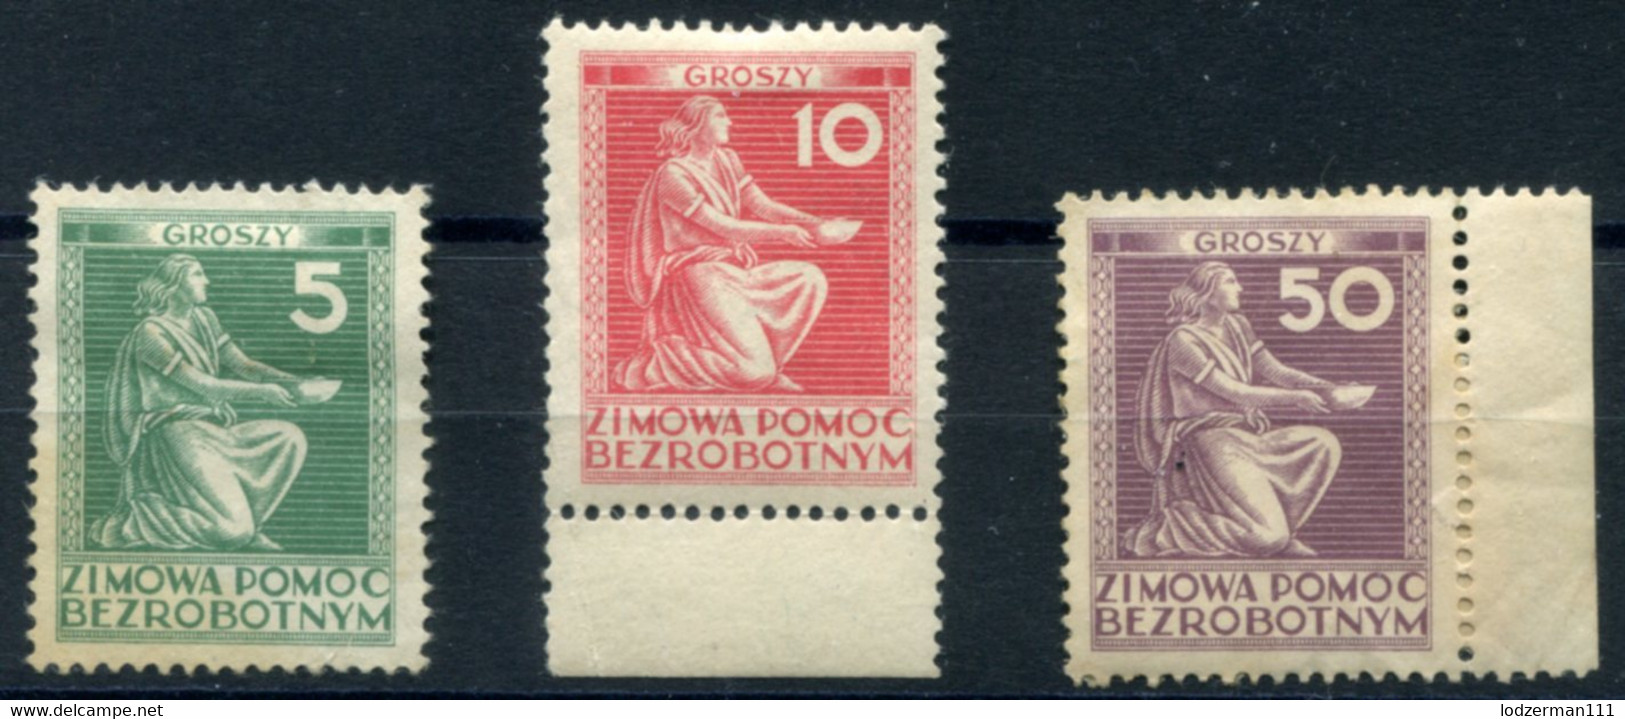 1935 Surtax BEZROBOTNYM (unemployment) - 3 Stamps (MNG-MH) Rare - Fiscaux